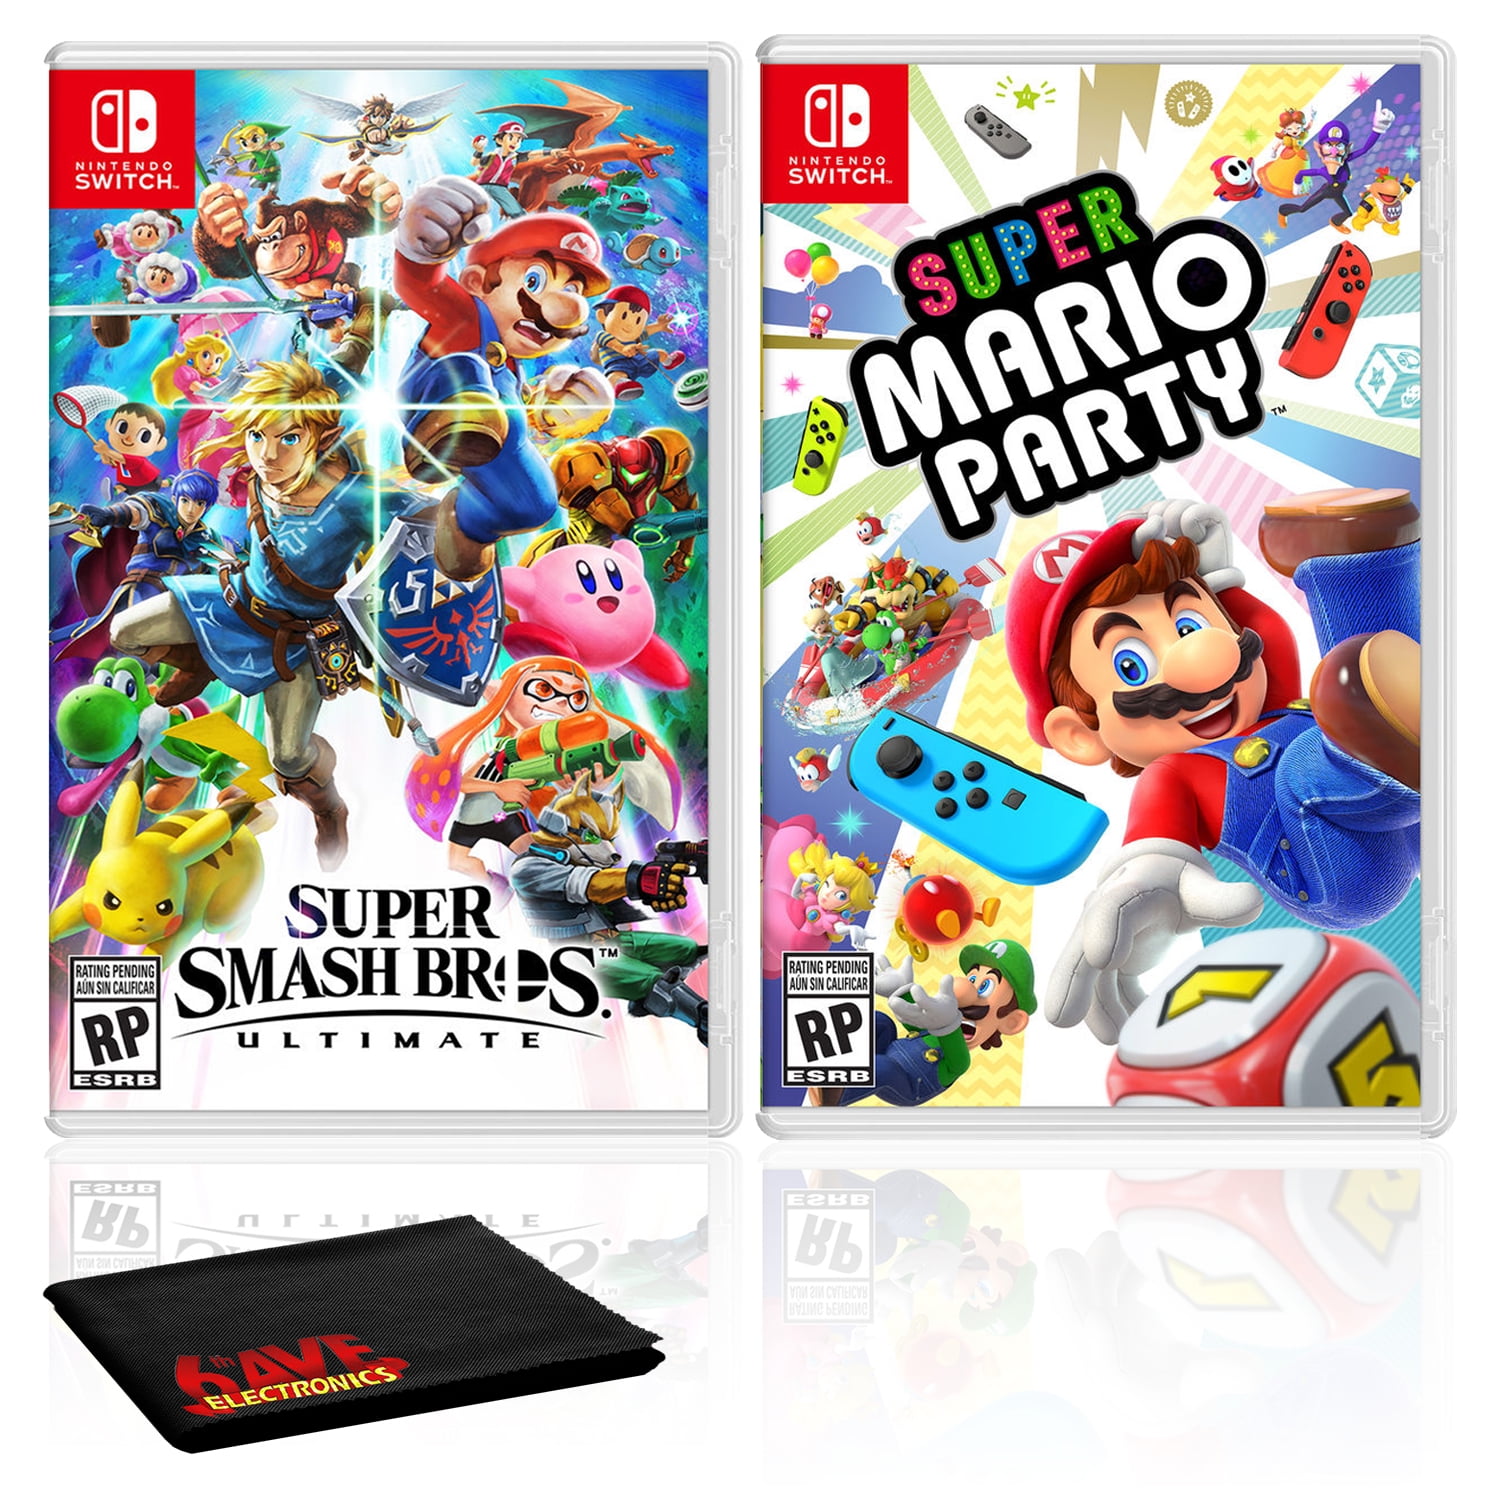 Super Smash Bros. Ultimate with Super Mario Party, Nintendo Switch, HACPAAABA-009